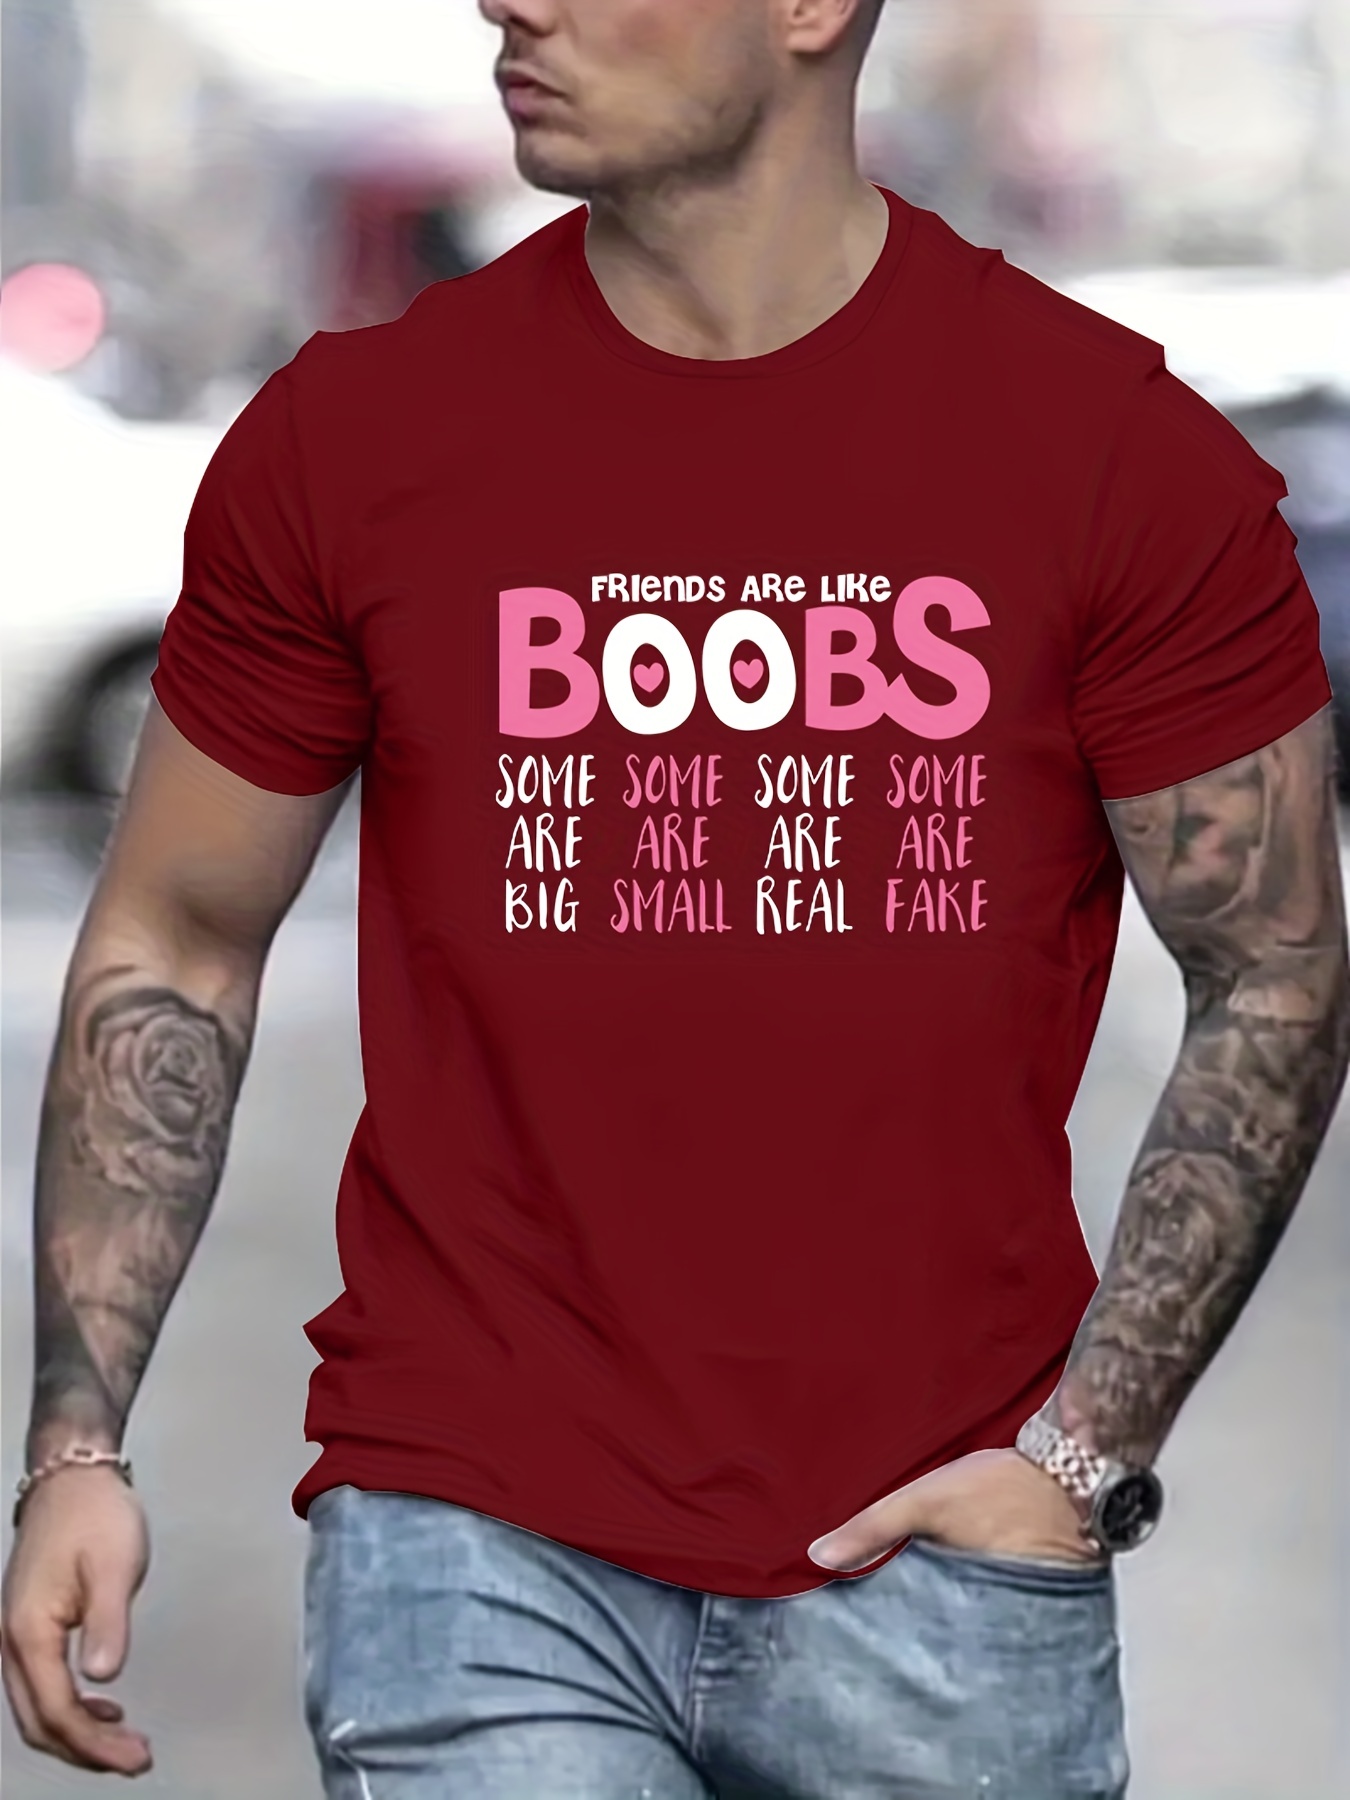 Boobs T-Shirts, Unique Designs